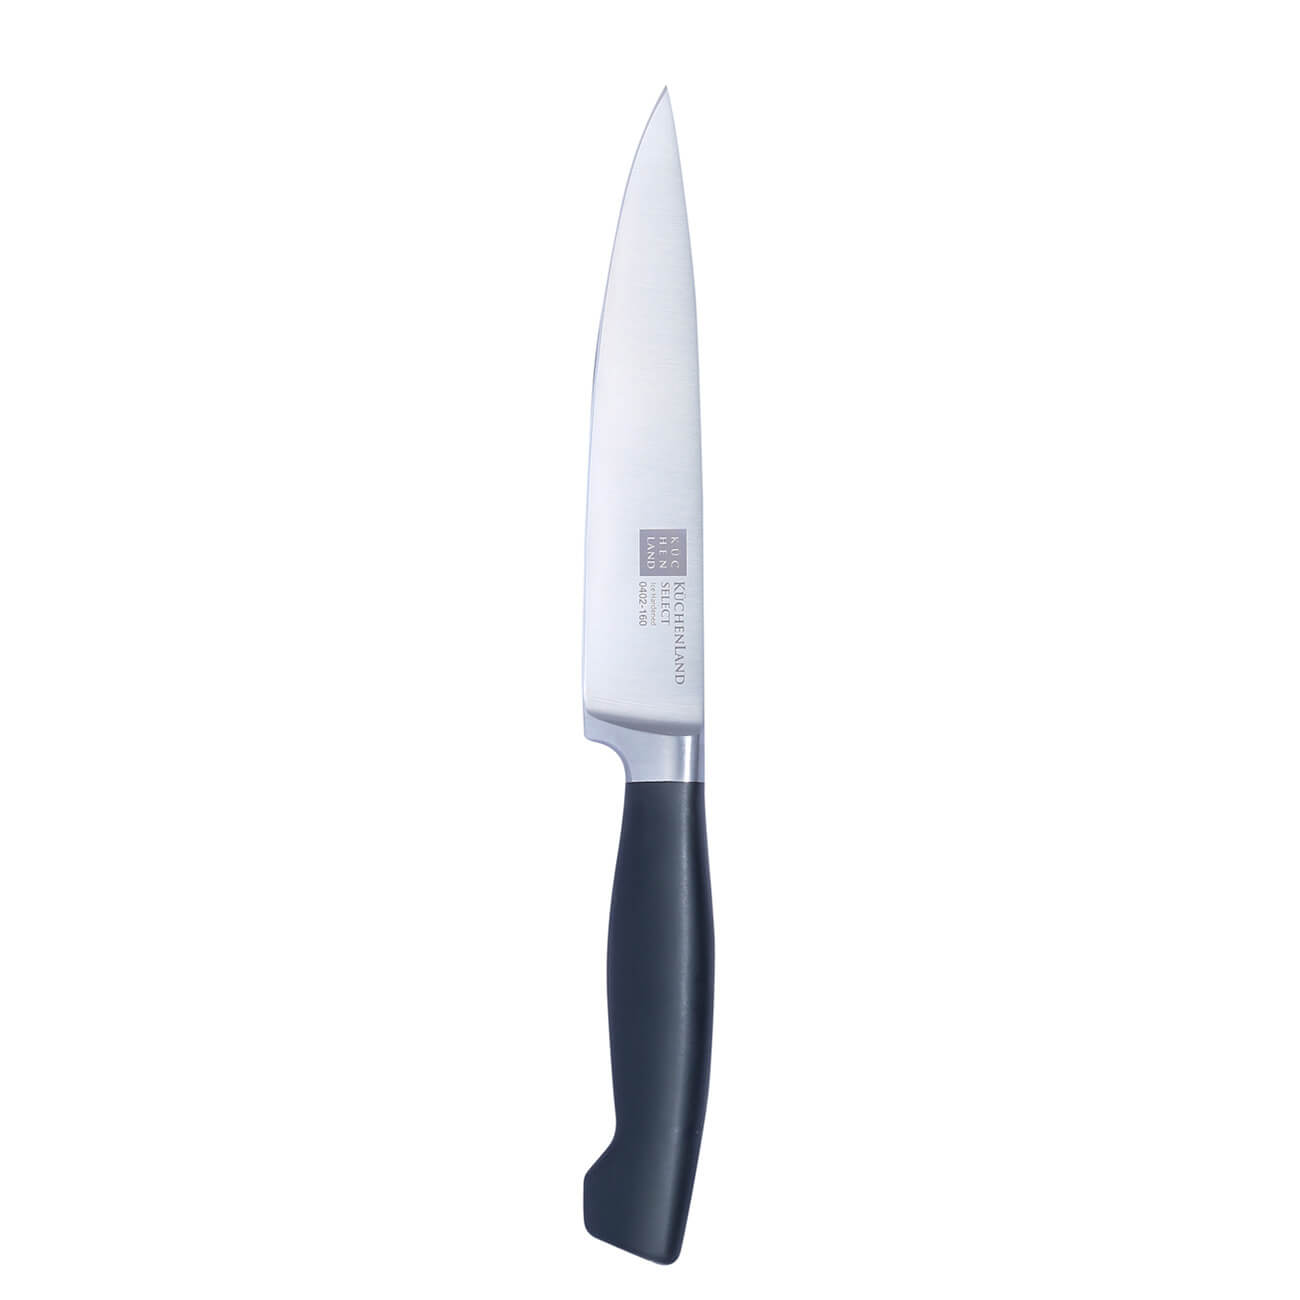 Carving knife, 16 cm, Steel/Plastic, Choose изображение № 1